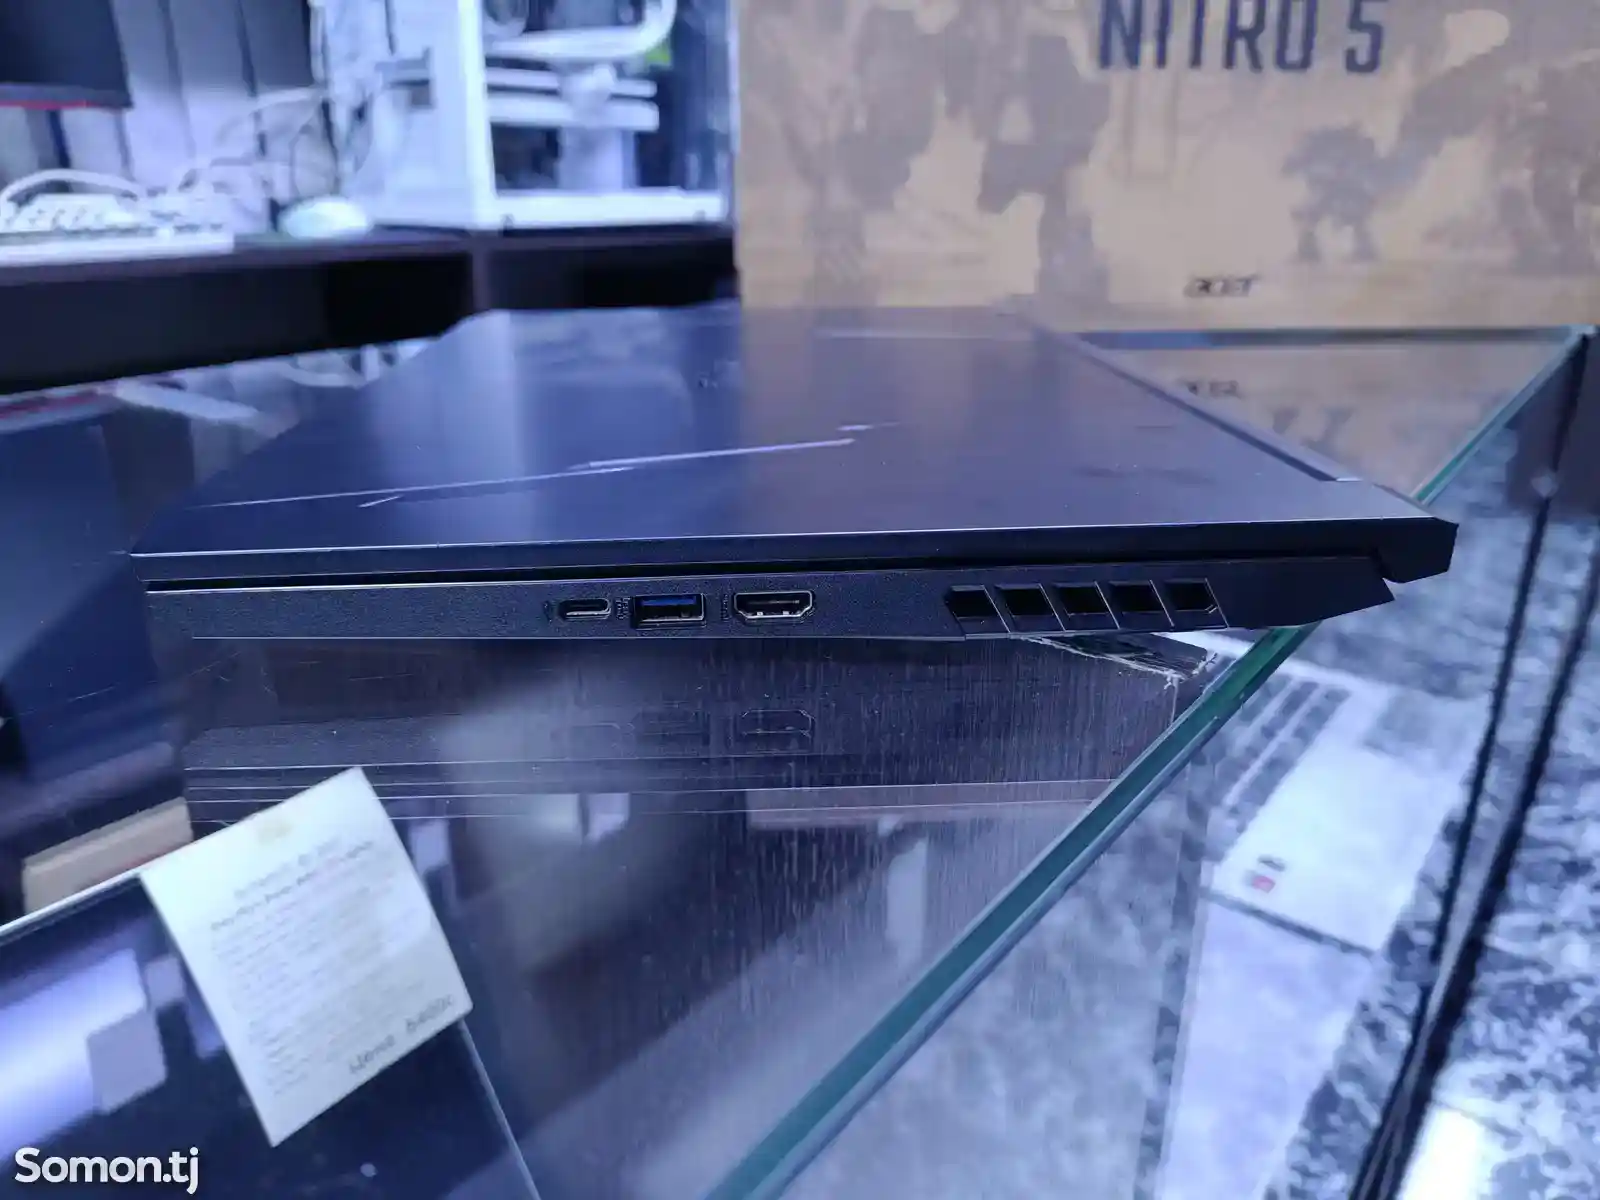 Ноутбук Acer Nitro 5 Core i7-11800H / RTX 3060 6GB / 16GB / 512GB SSD-9